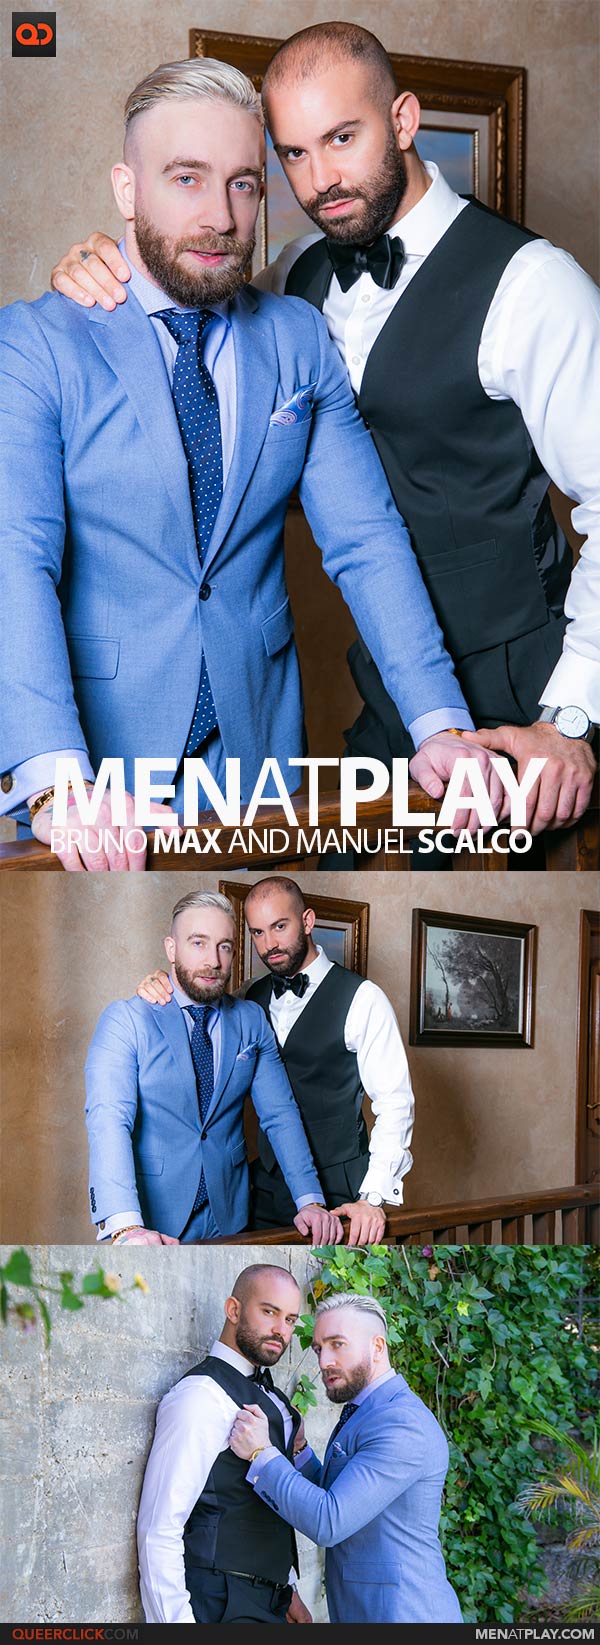 MenatPlay: Bruno Max and Manuel Scalco